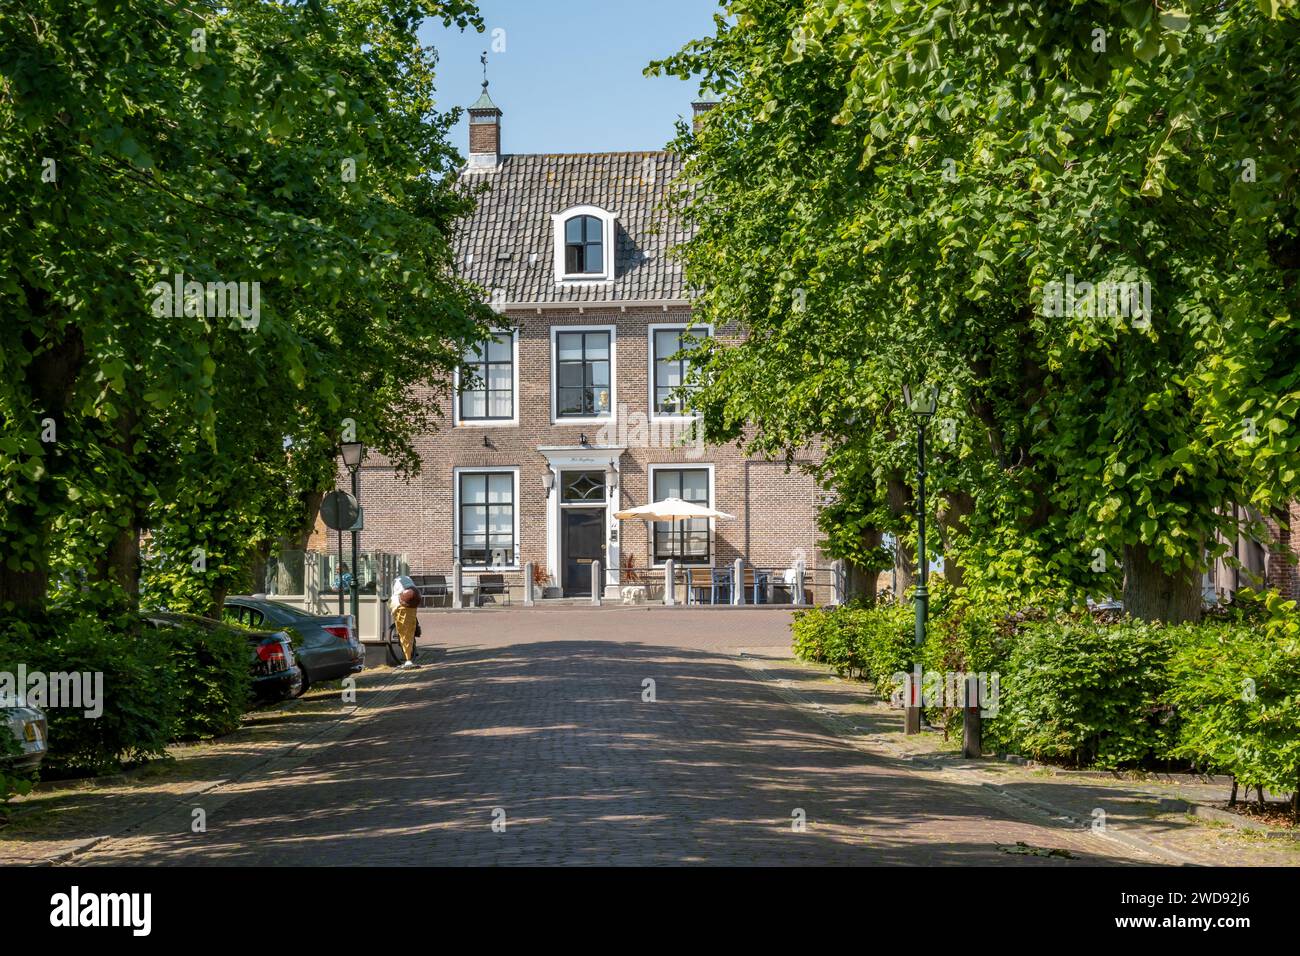 Streetscene with facade of monumental Regthuys in town of Colijnsplaat, Noord-Beveland, Zeeland, Netherlands Stock Photo